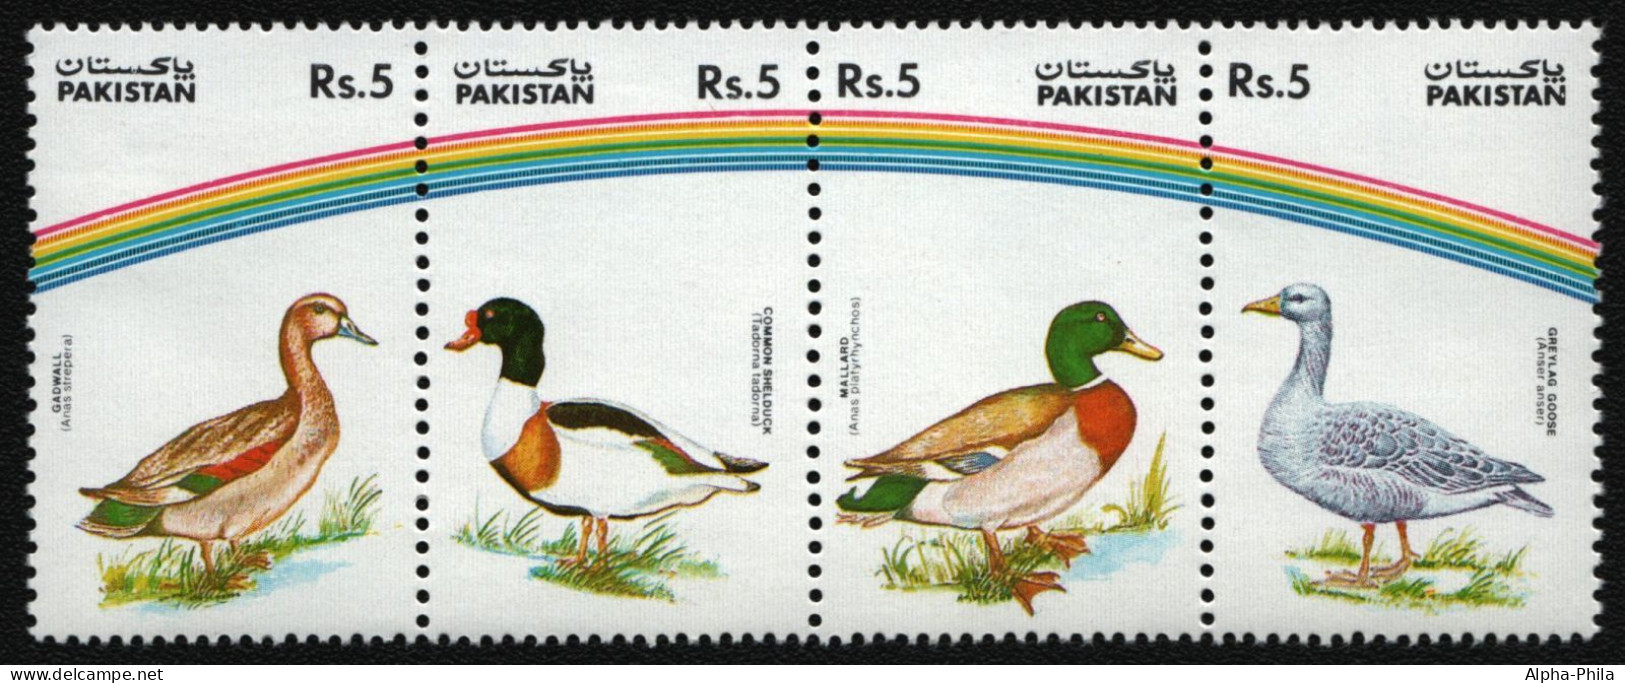 Pakistan 1992 - Mi-Nr. 863-866 ** - MNH - Vögel / Birds (III) - Pakistan